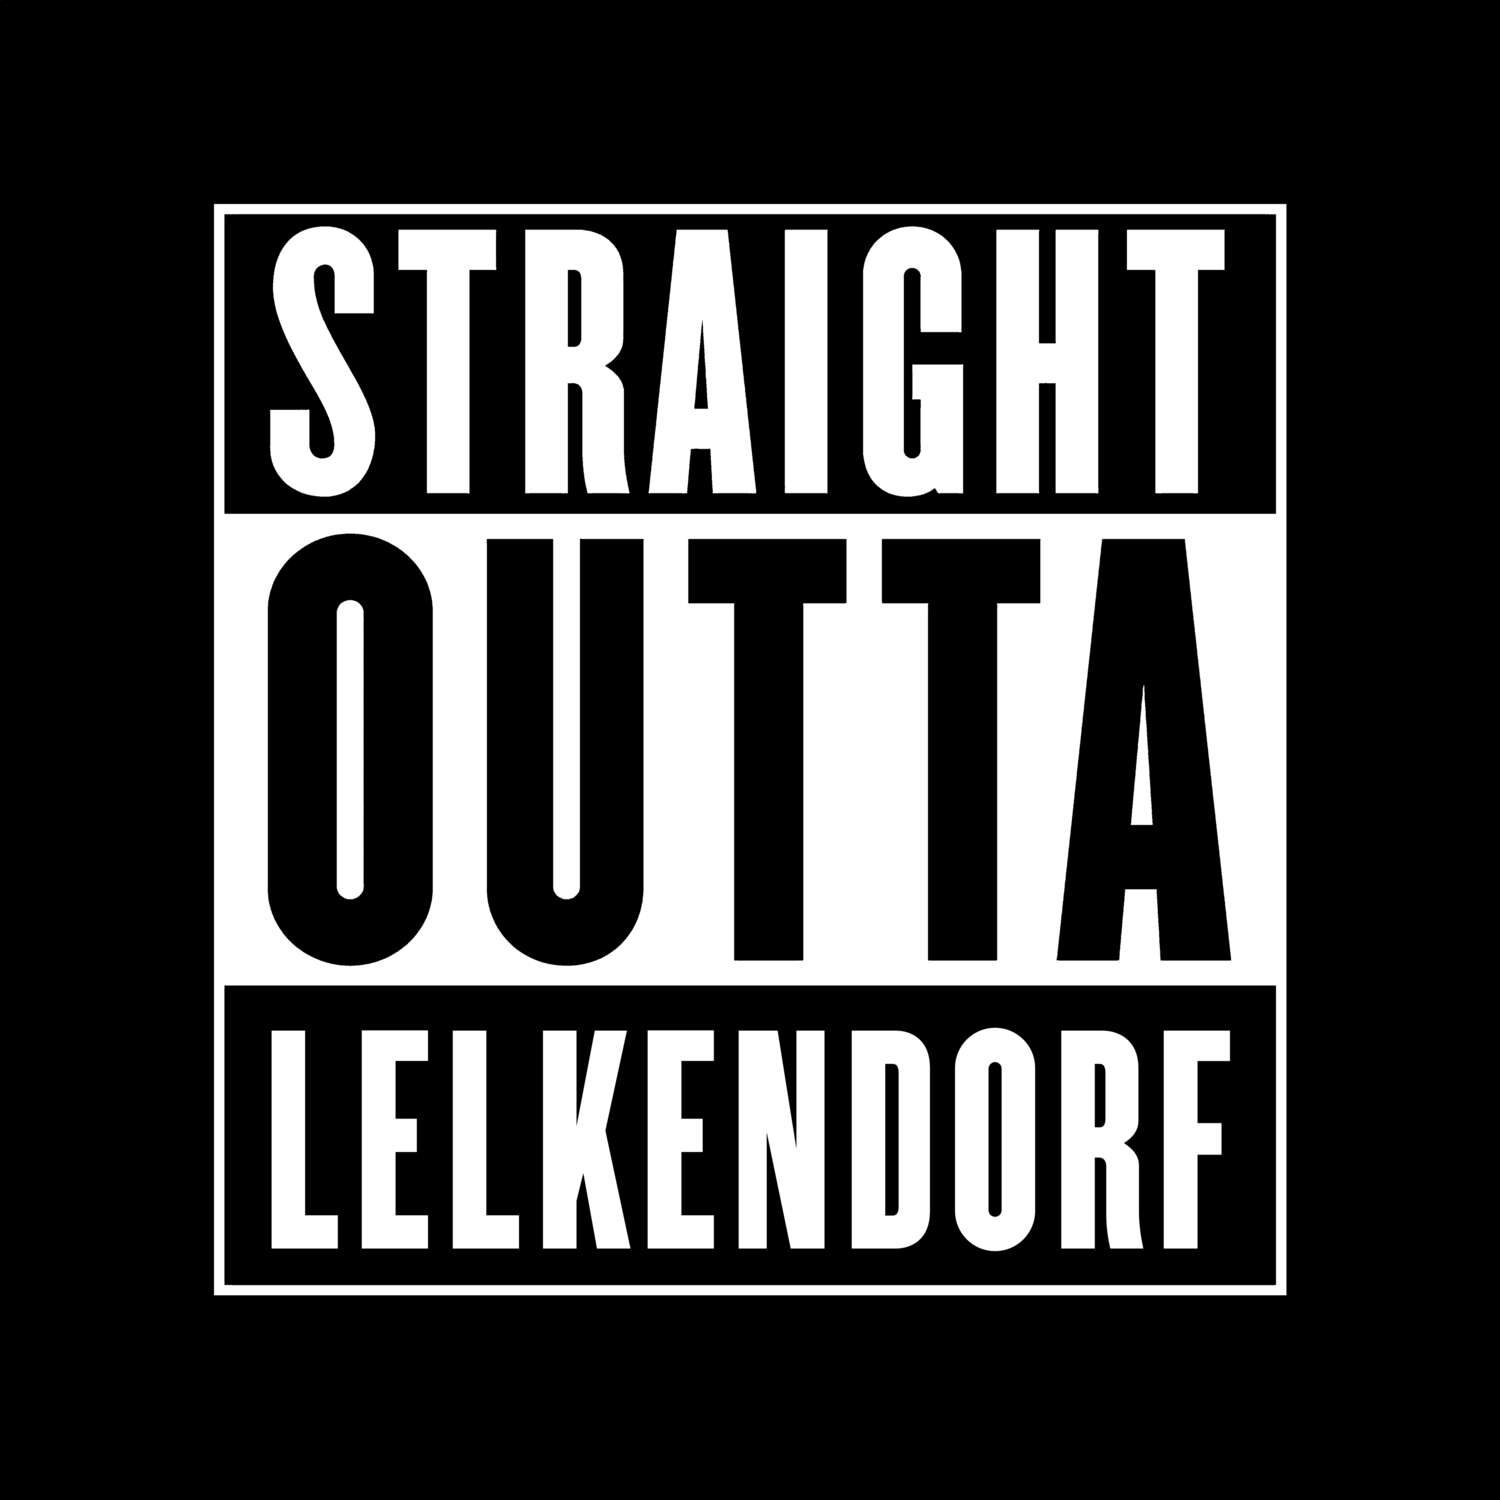 Lelkendorf T-Shirt »Straight Outta«